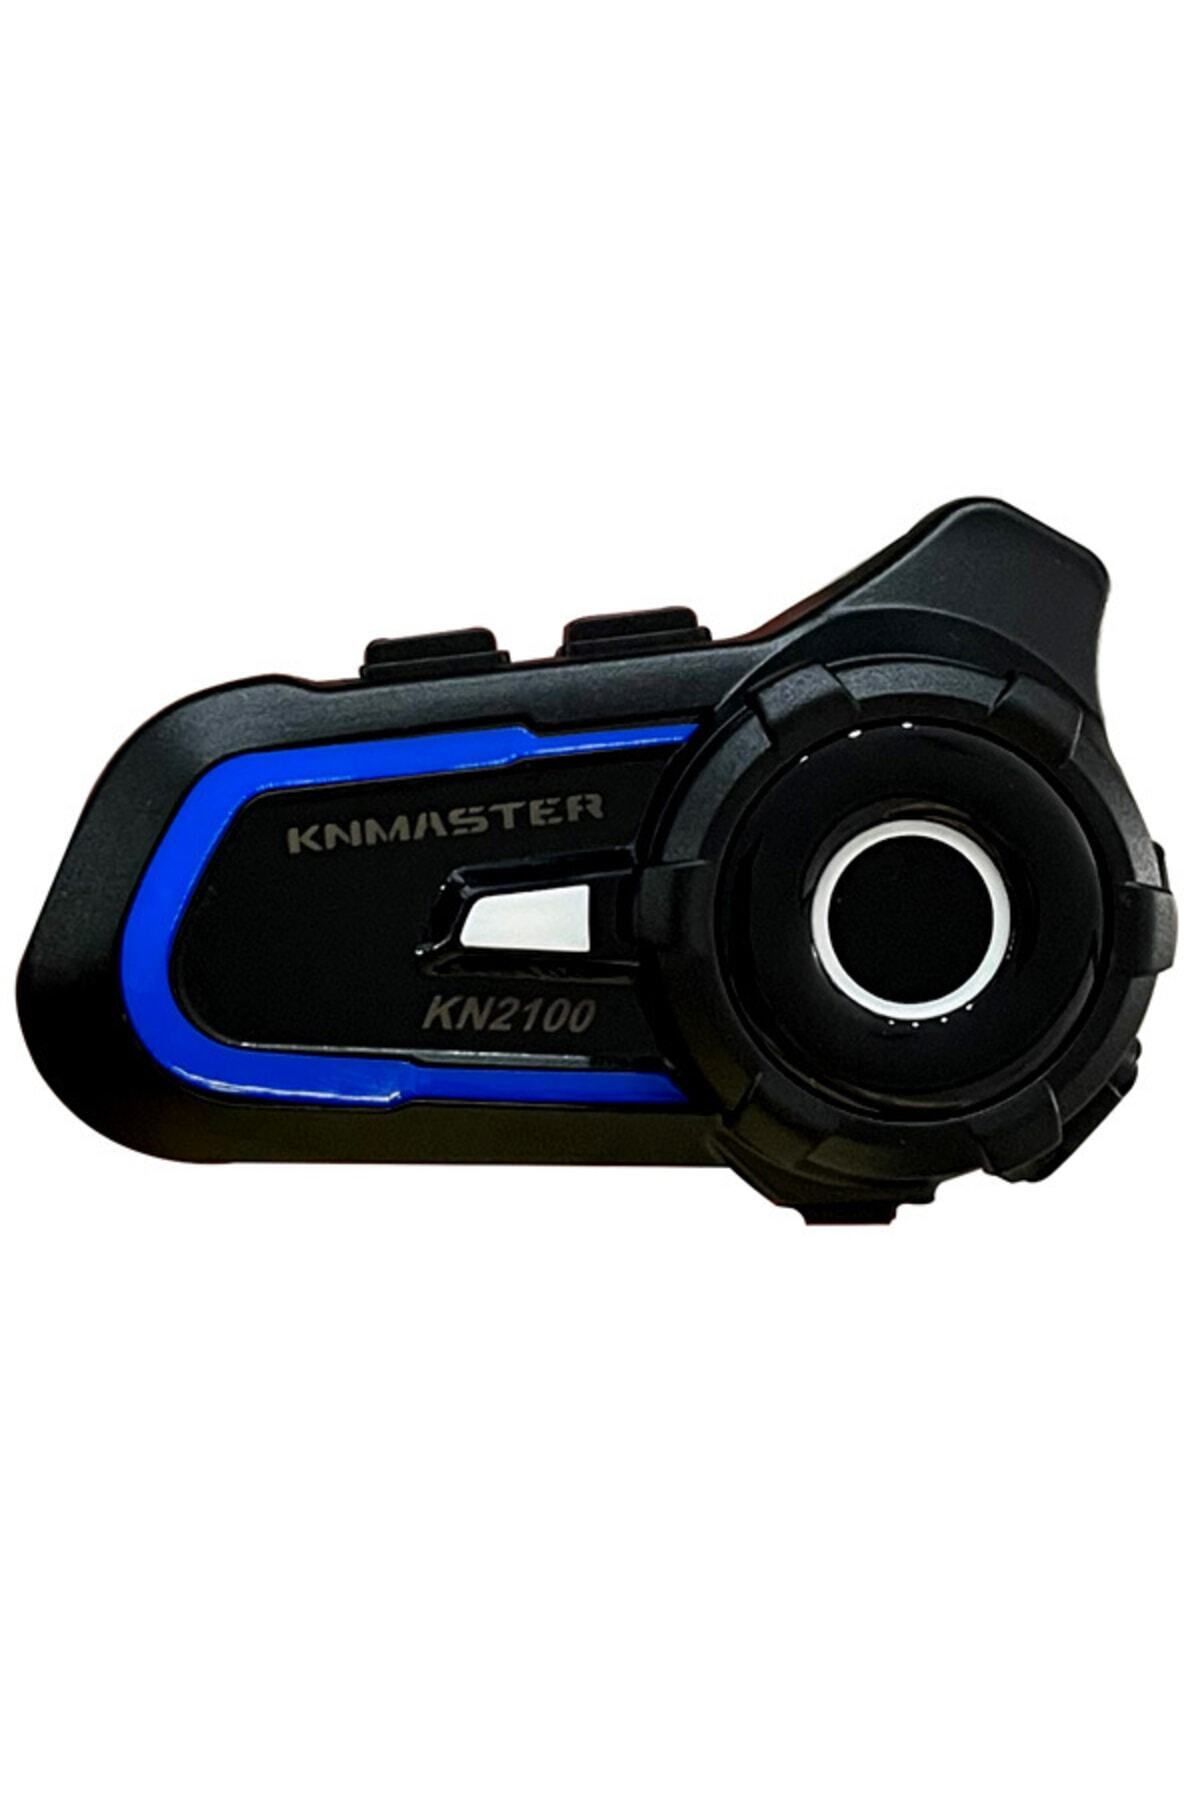 Knmaster Kn2100 Motosiklet Kask Interkom Bluetooth Intercom Kulaklık Seti Mavi Seti Uyumlu